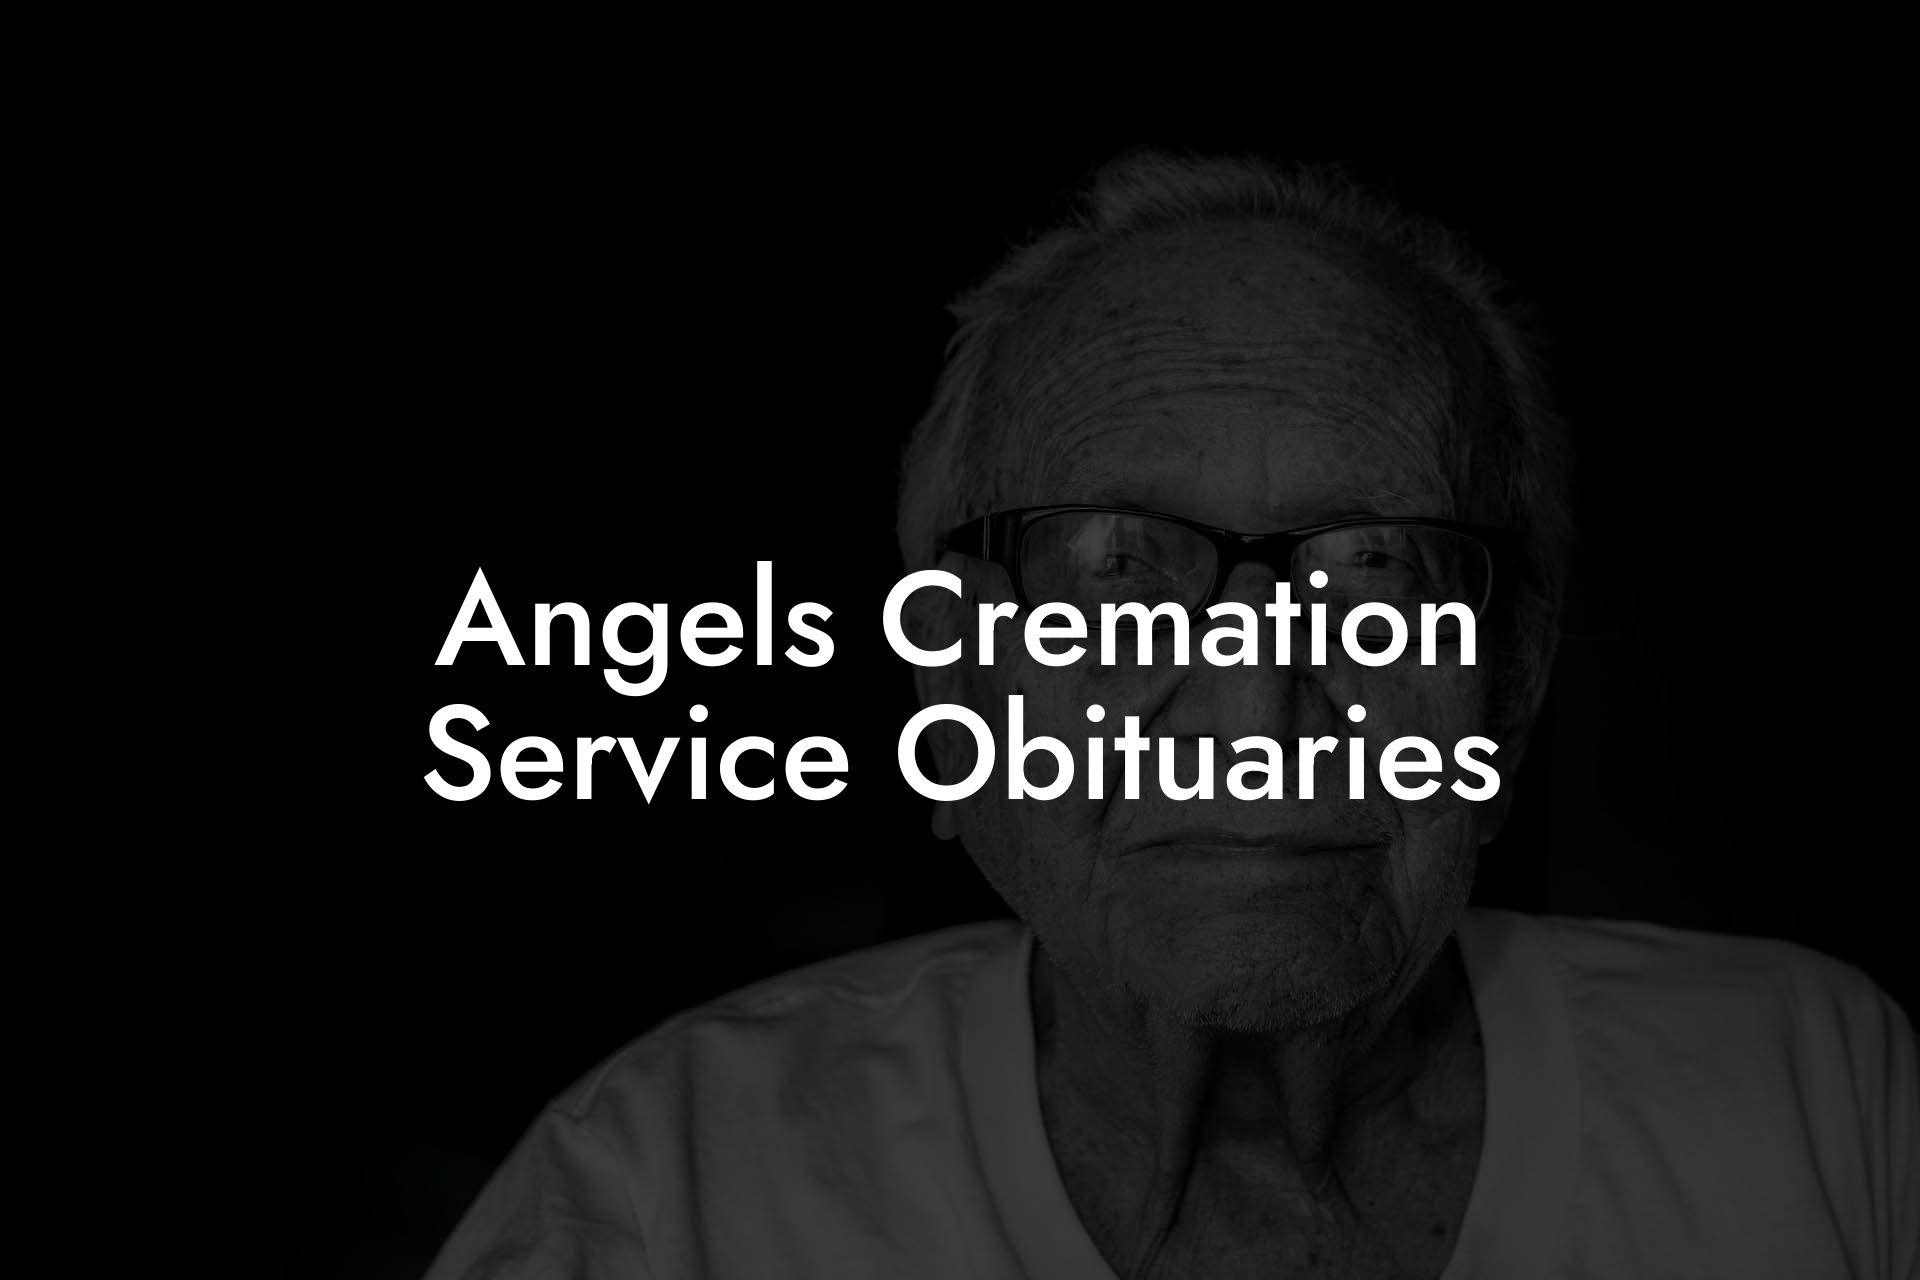 Angels Cremation Service Obituaries